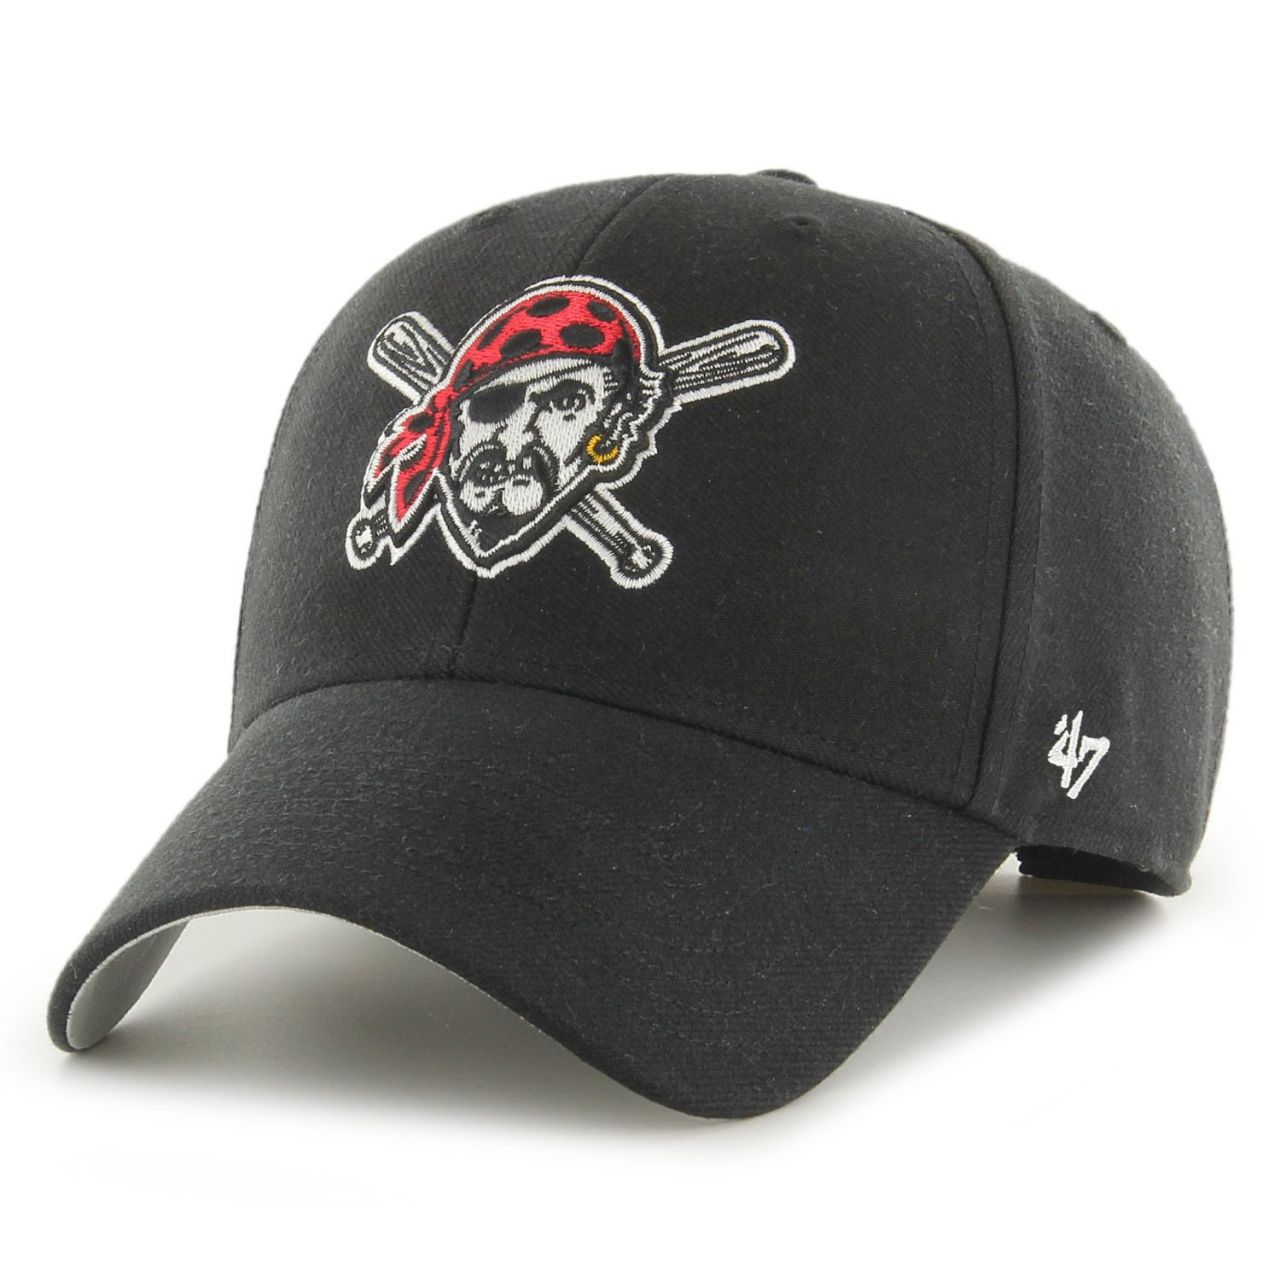 47 Brand Relaxed Fit Cap - MLB RETRO Pittsburgh Pirates von 47 Brand